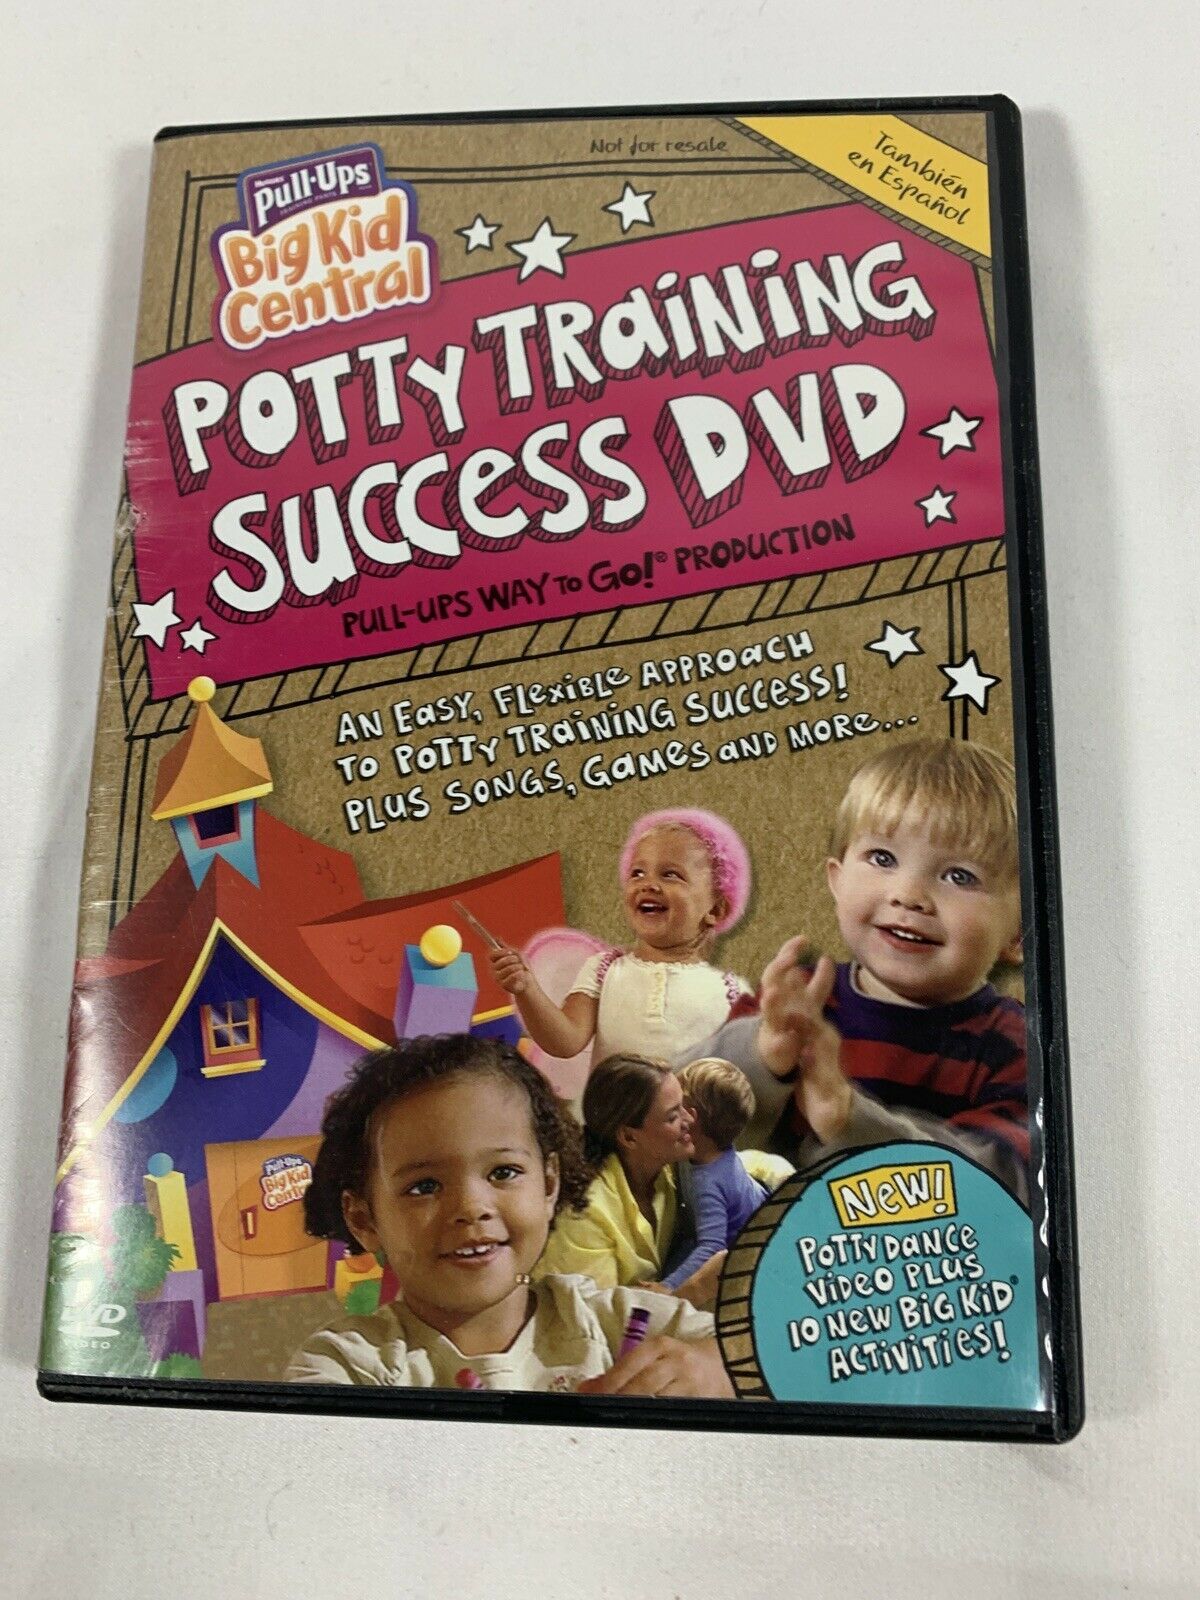 Huggies Pull Up Big Kid Central Potty Training Success ( DVD 2010)  - $2.96